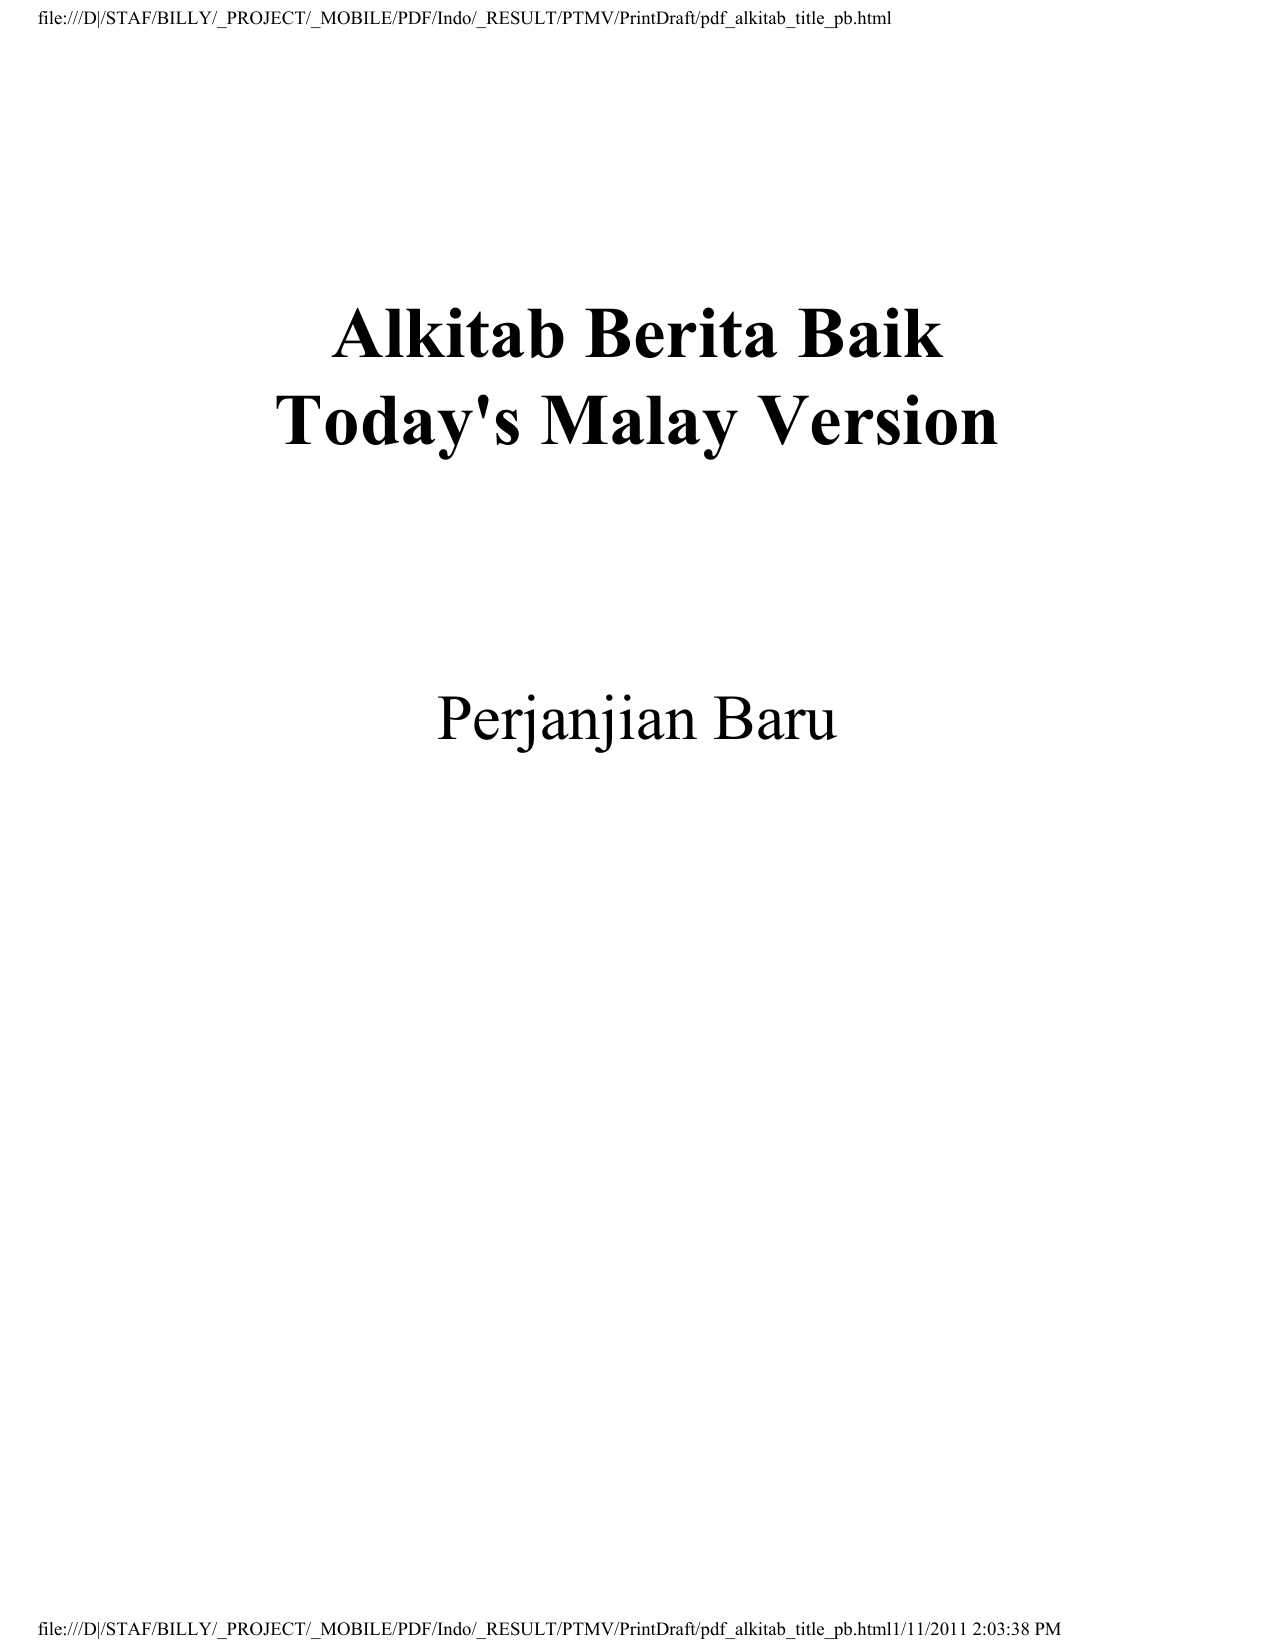 Alkitab Berita Baik Today S Malay Version